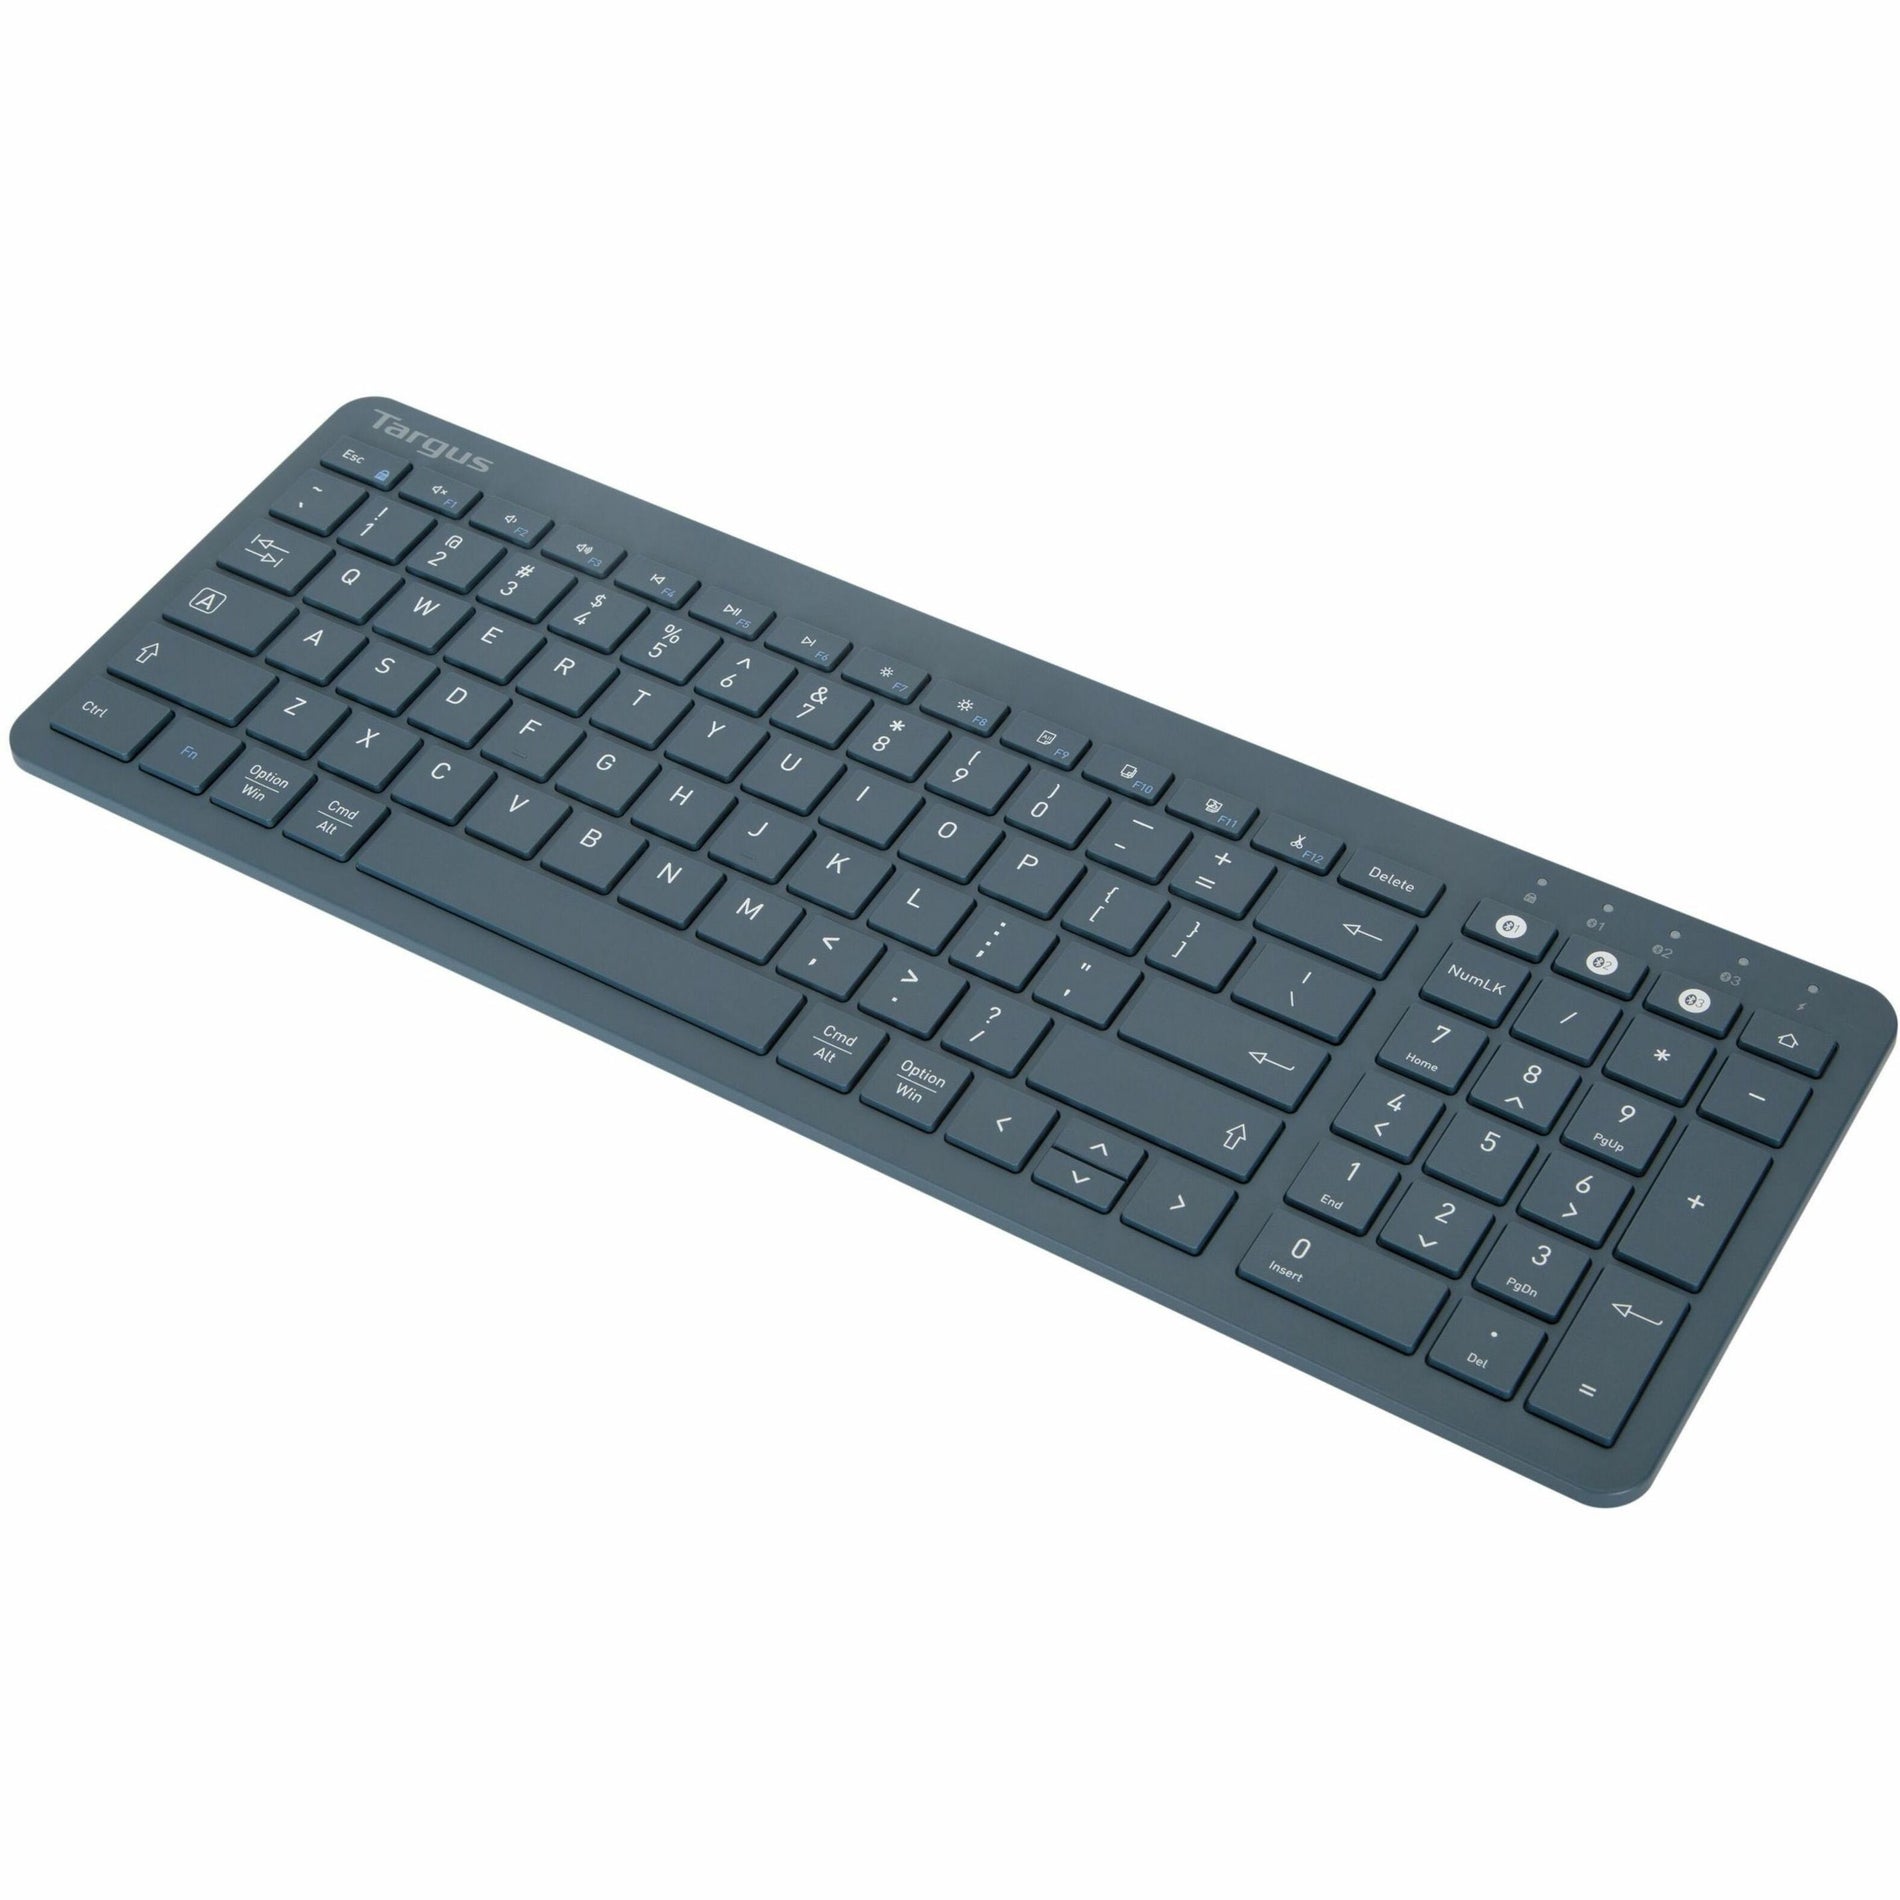 Targus PKB86302US Midsize Multi-Device Bluetooth Antimicrobial Keyboard Blue, Slim, Compact Keyboard